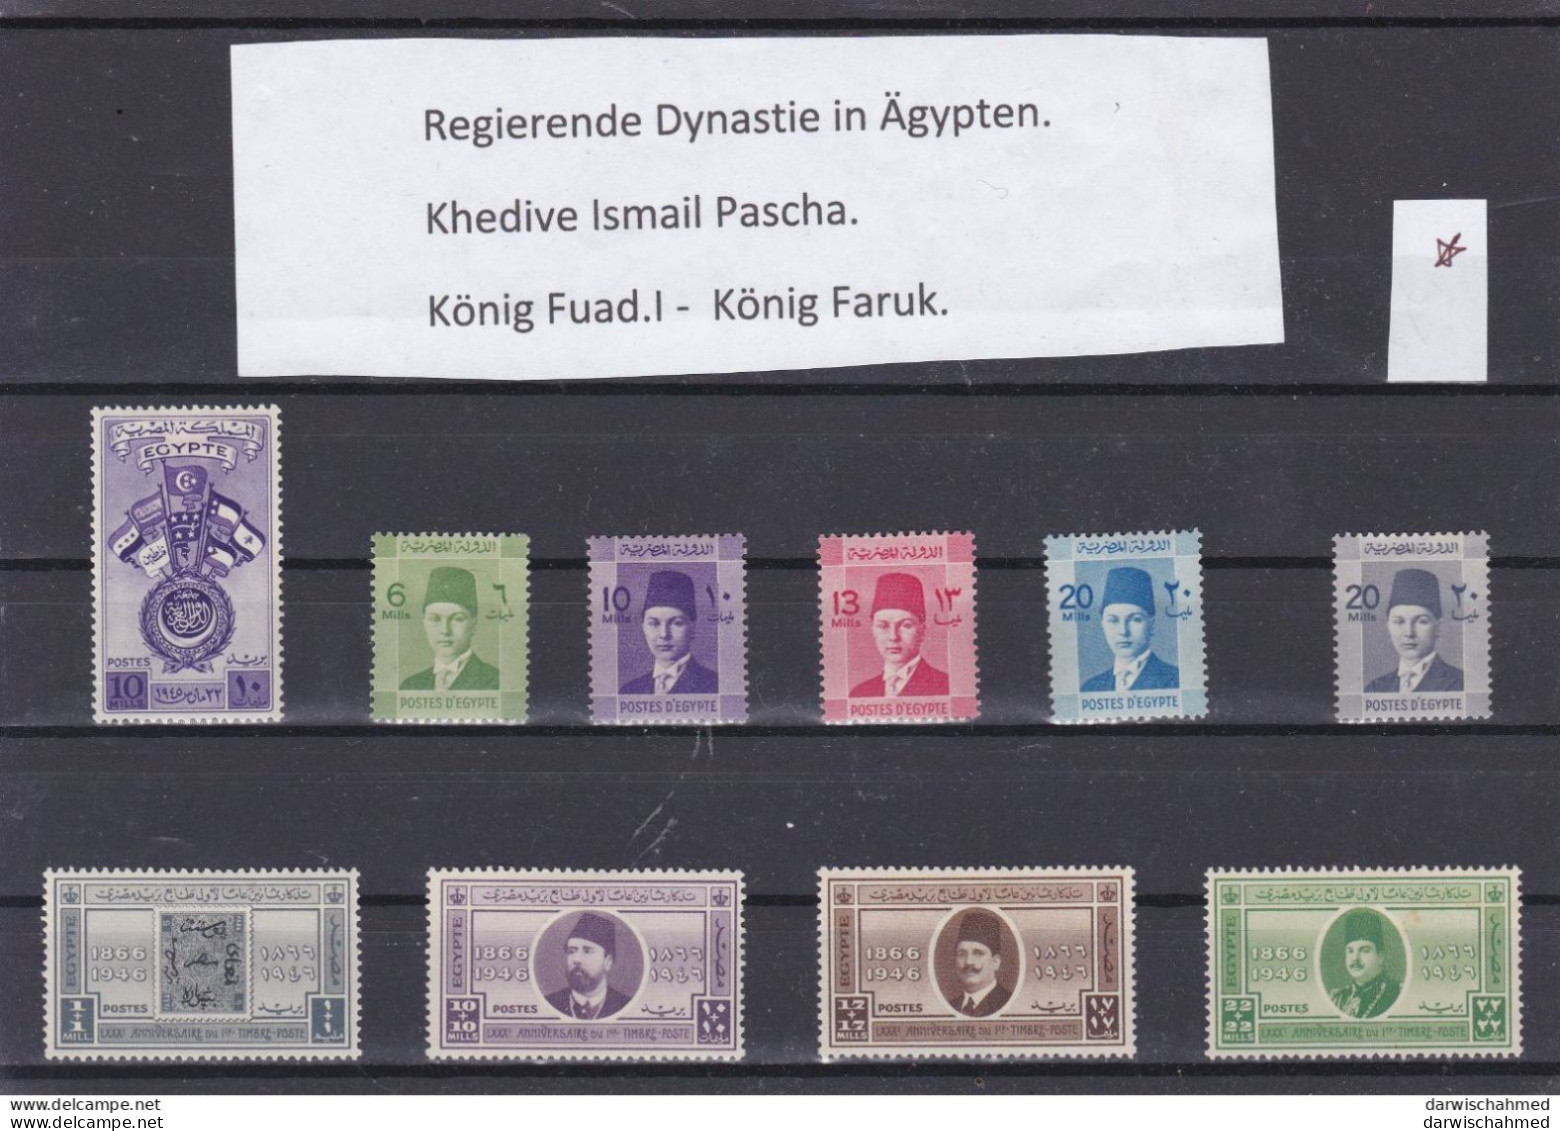 ÄGYPTEN - EGYPT - REGIERENDE MONARCHIE - KHDIVE ISMAIL PASCHA - KÖNIG FUAD -KÖNIG FARUK - Used Stamps